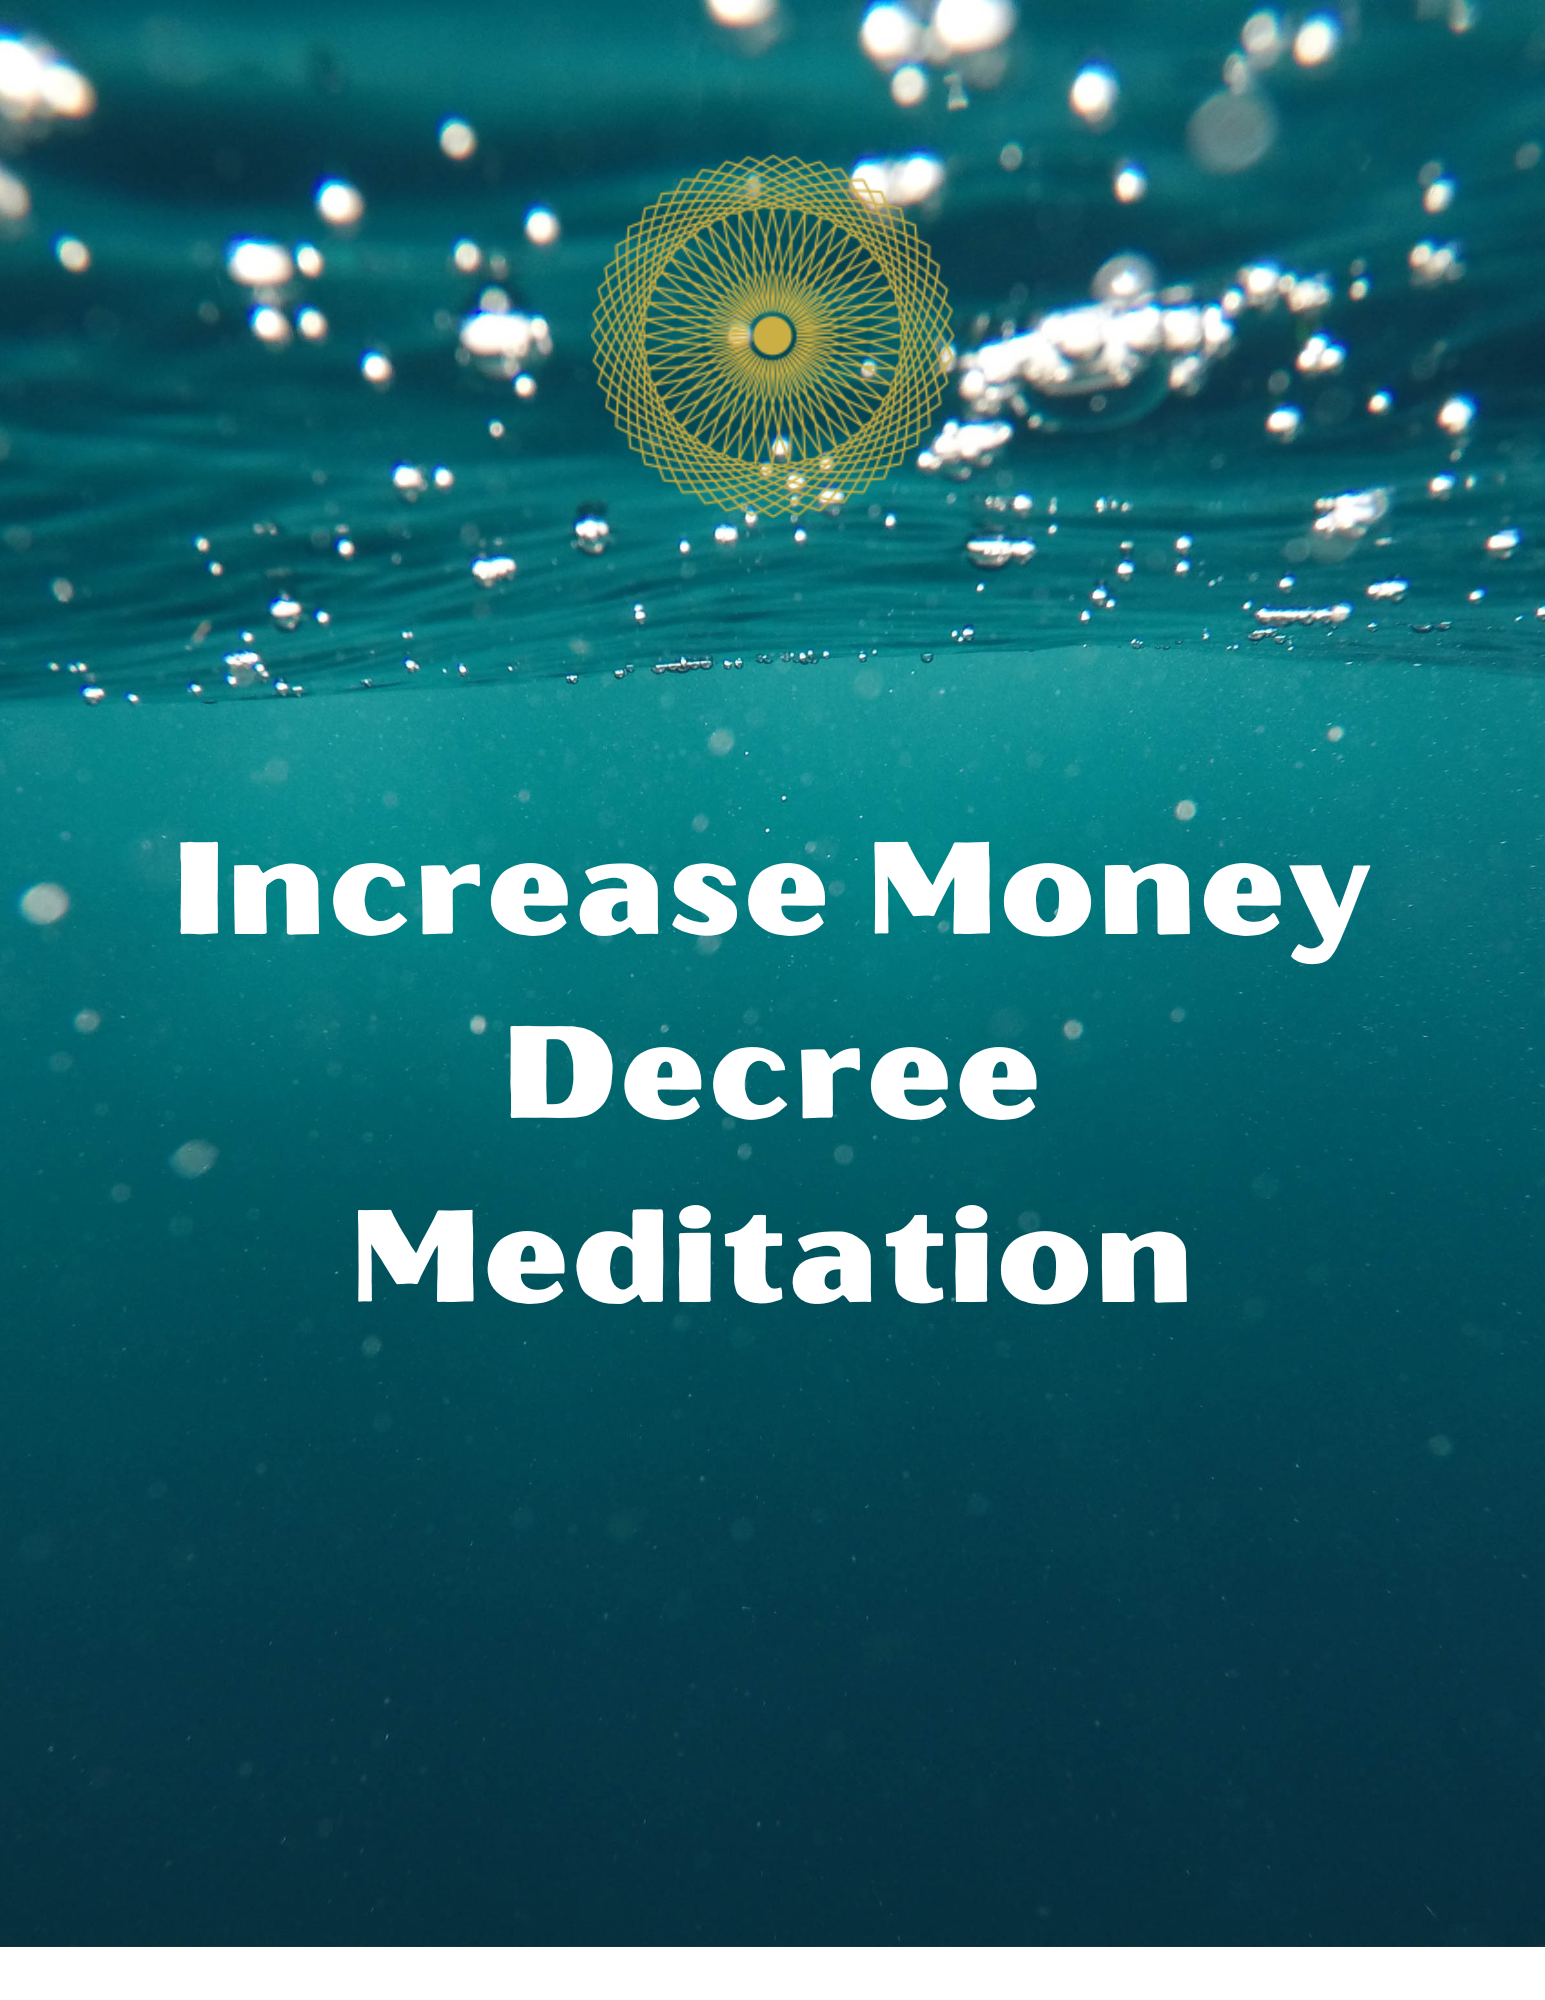 "Increase Money Decree" (Meditation Audio File)